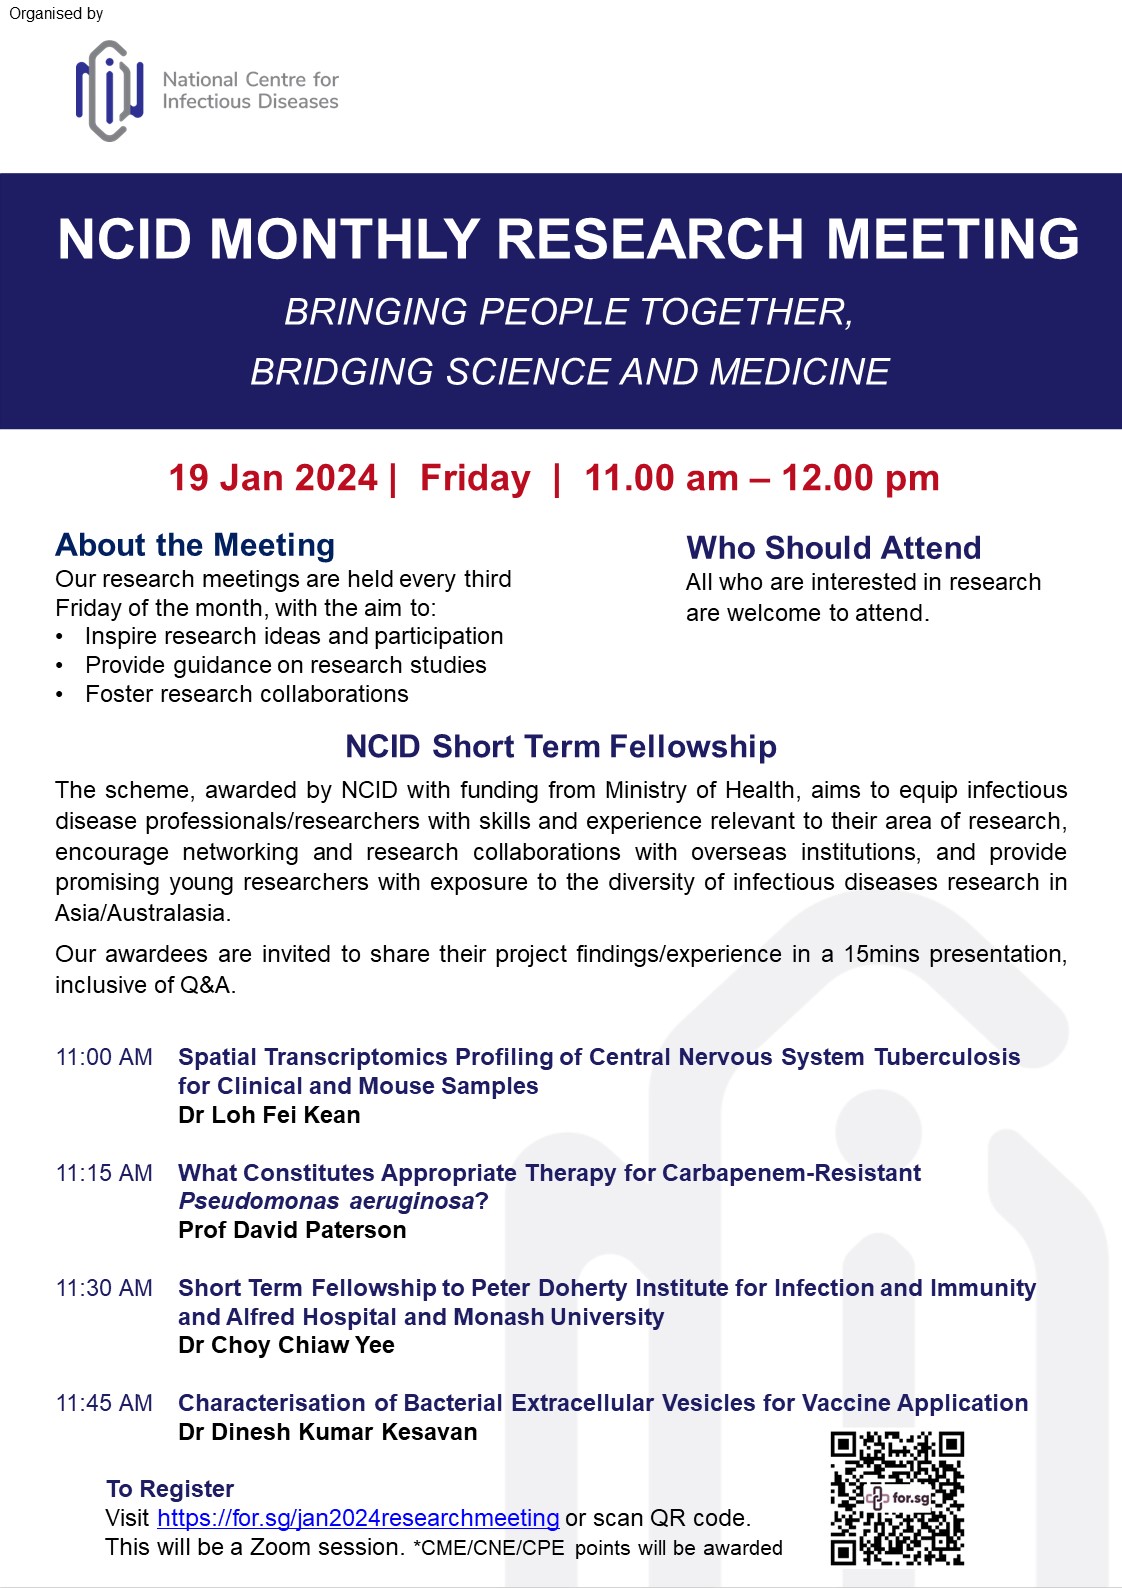 NCID Research Meeting Publicity Poster_Jan2024 (1).JPG